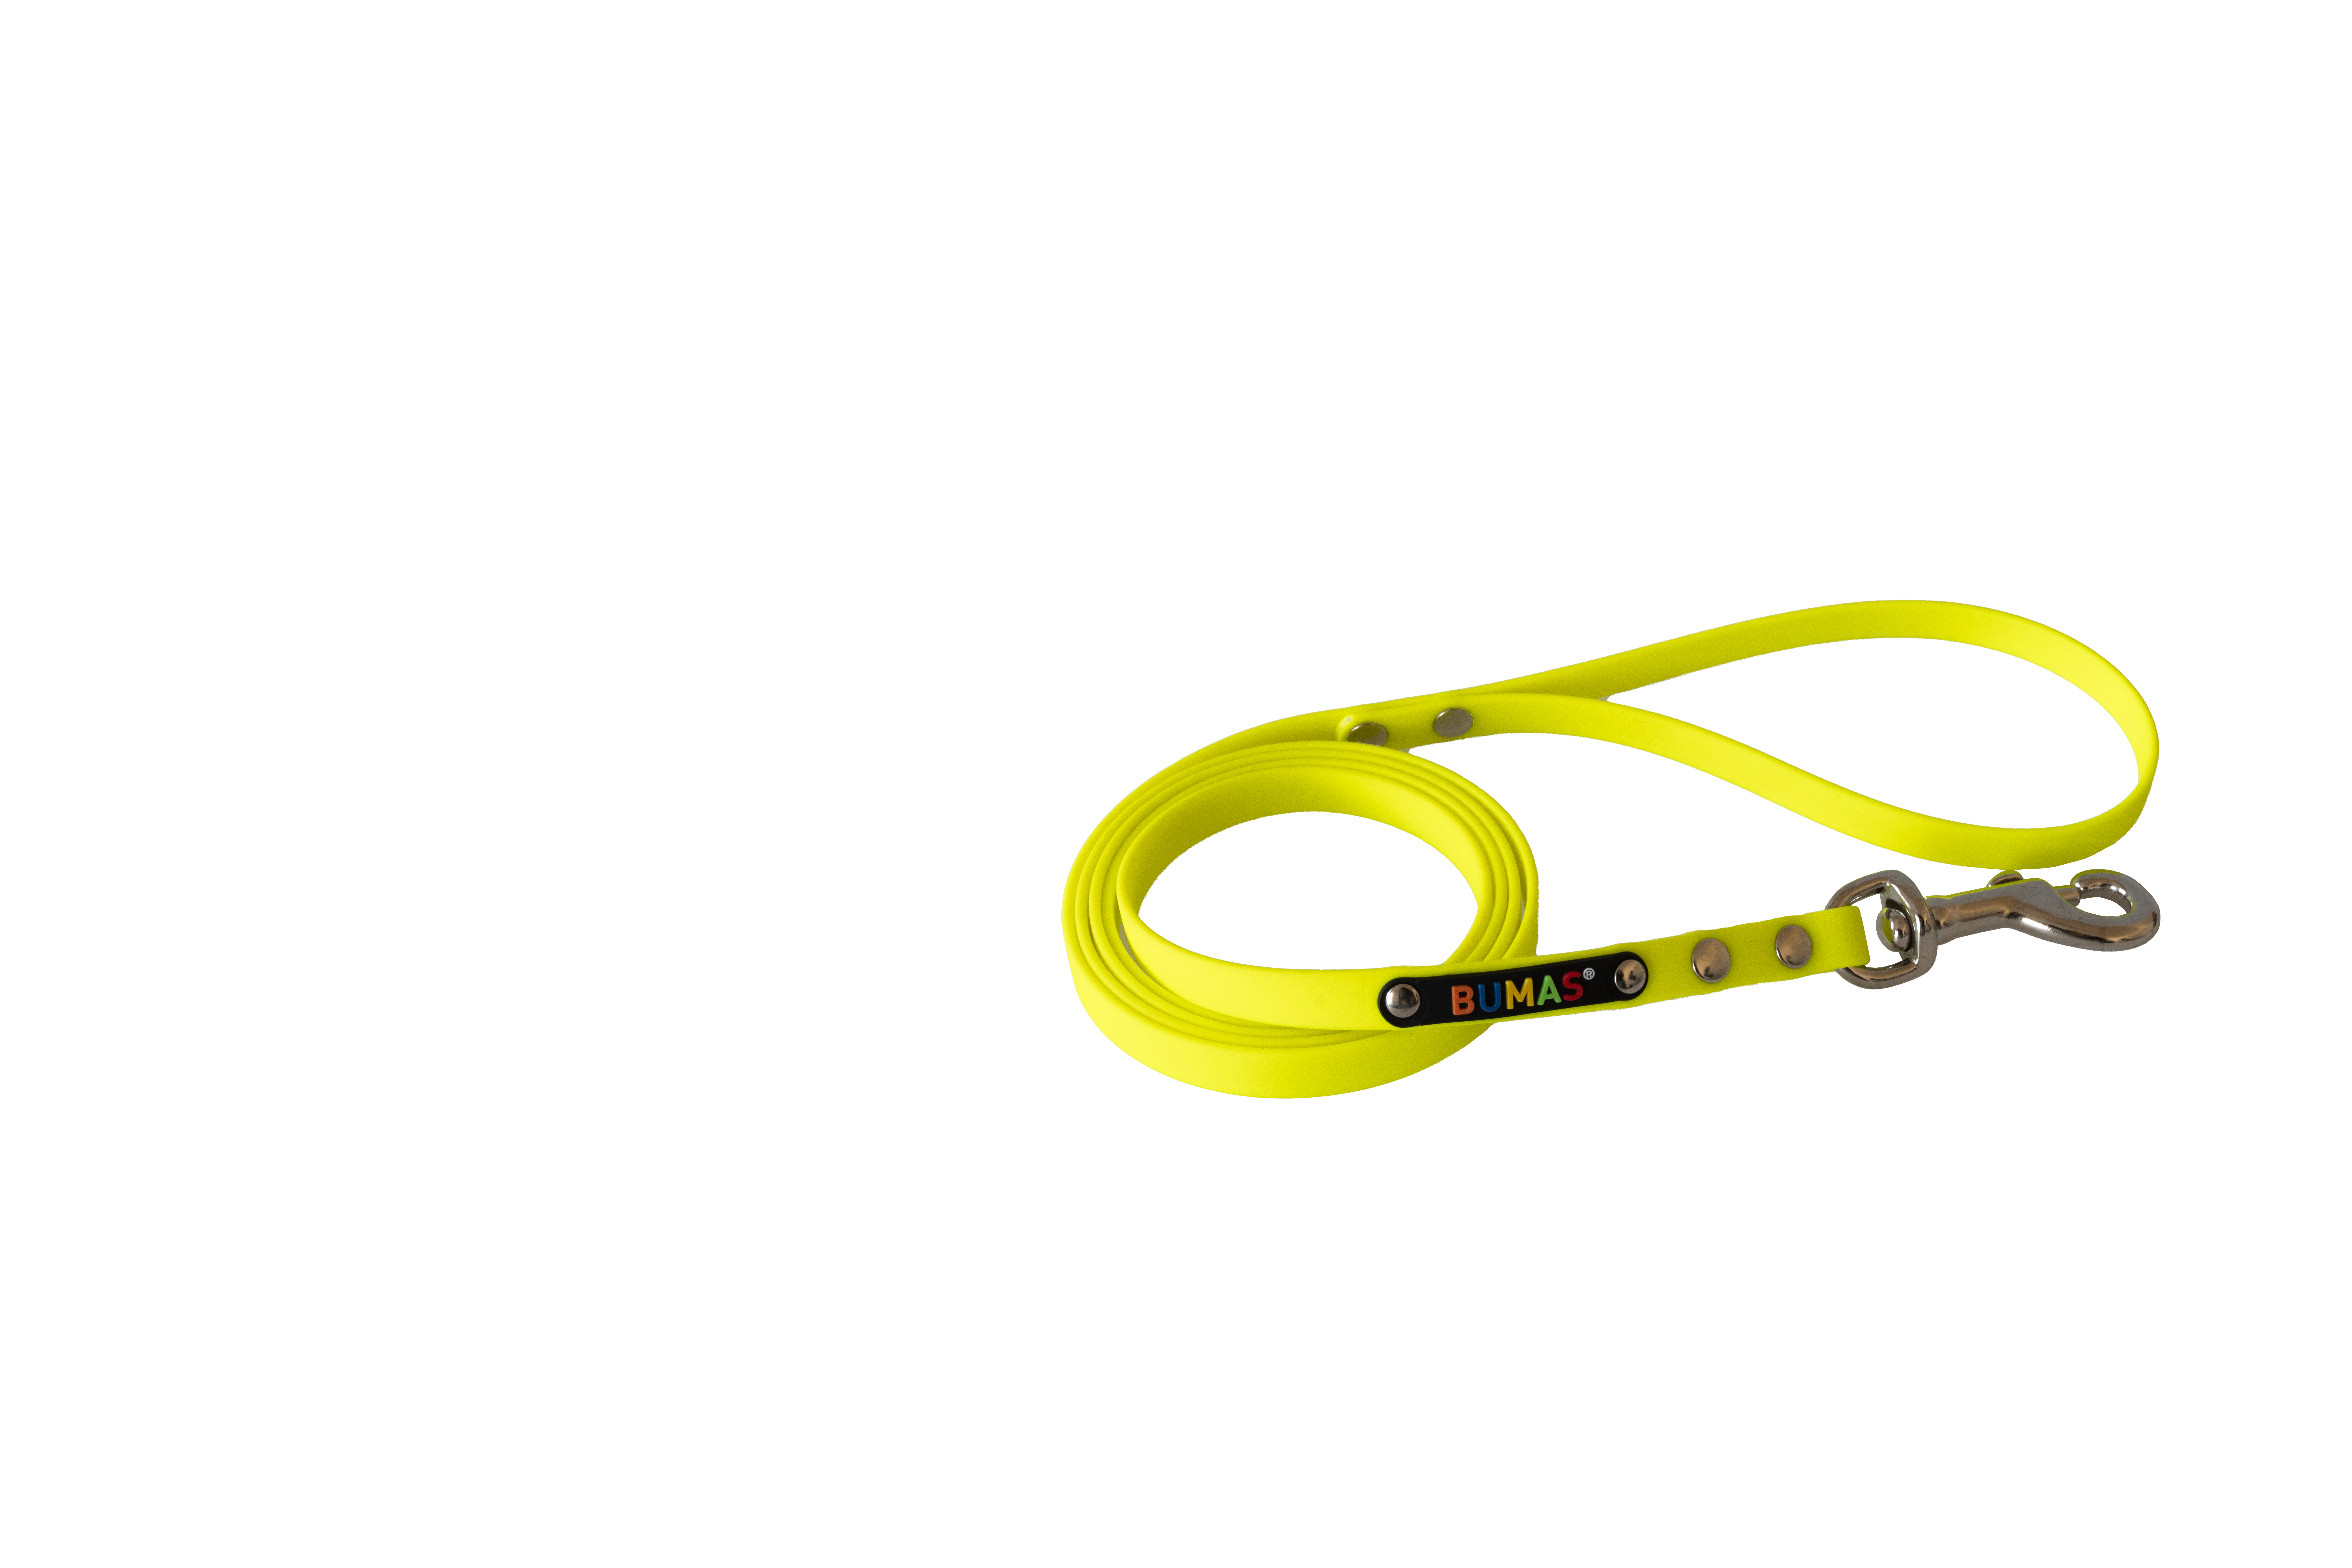 BUMAS to measure leash adjustable